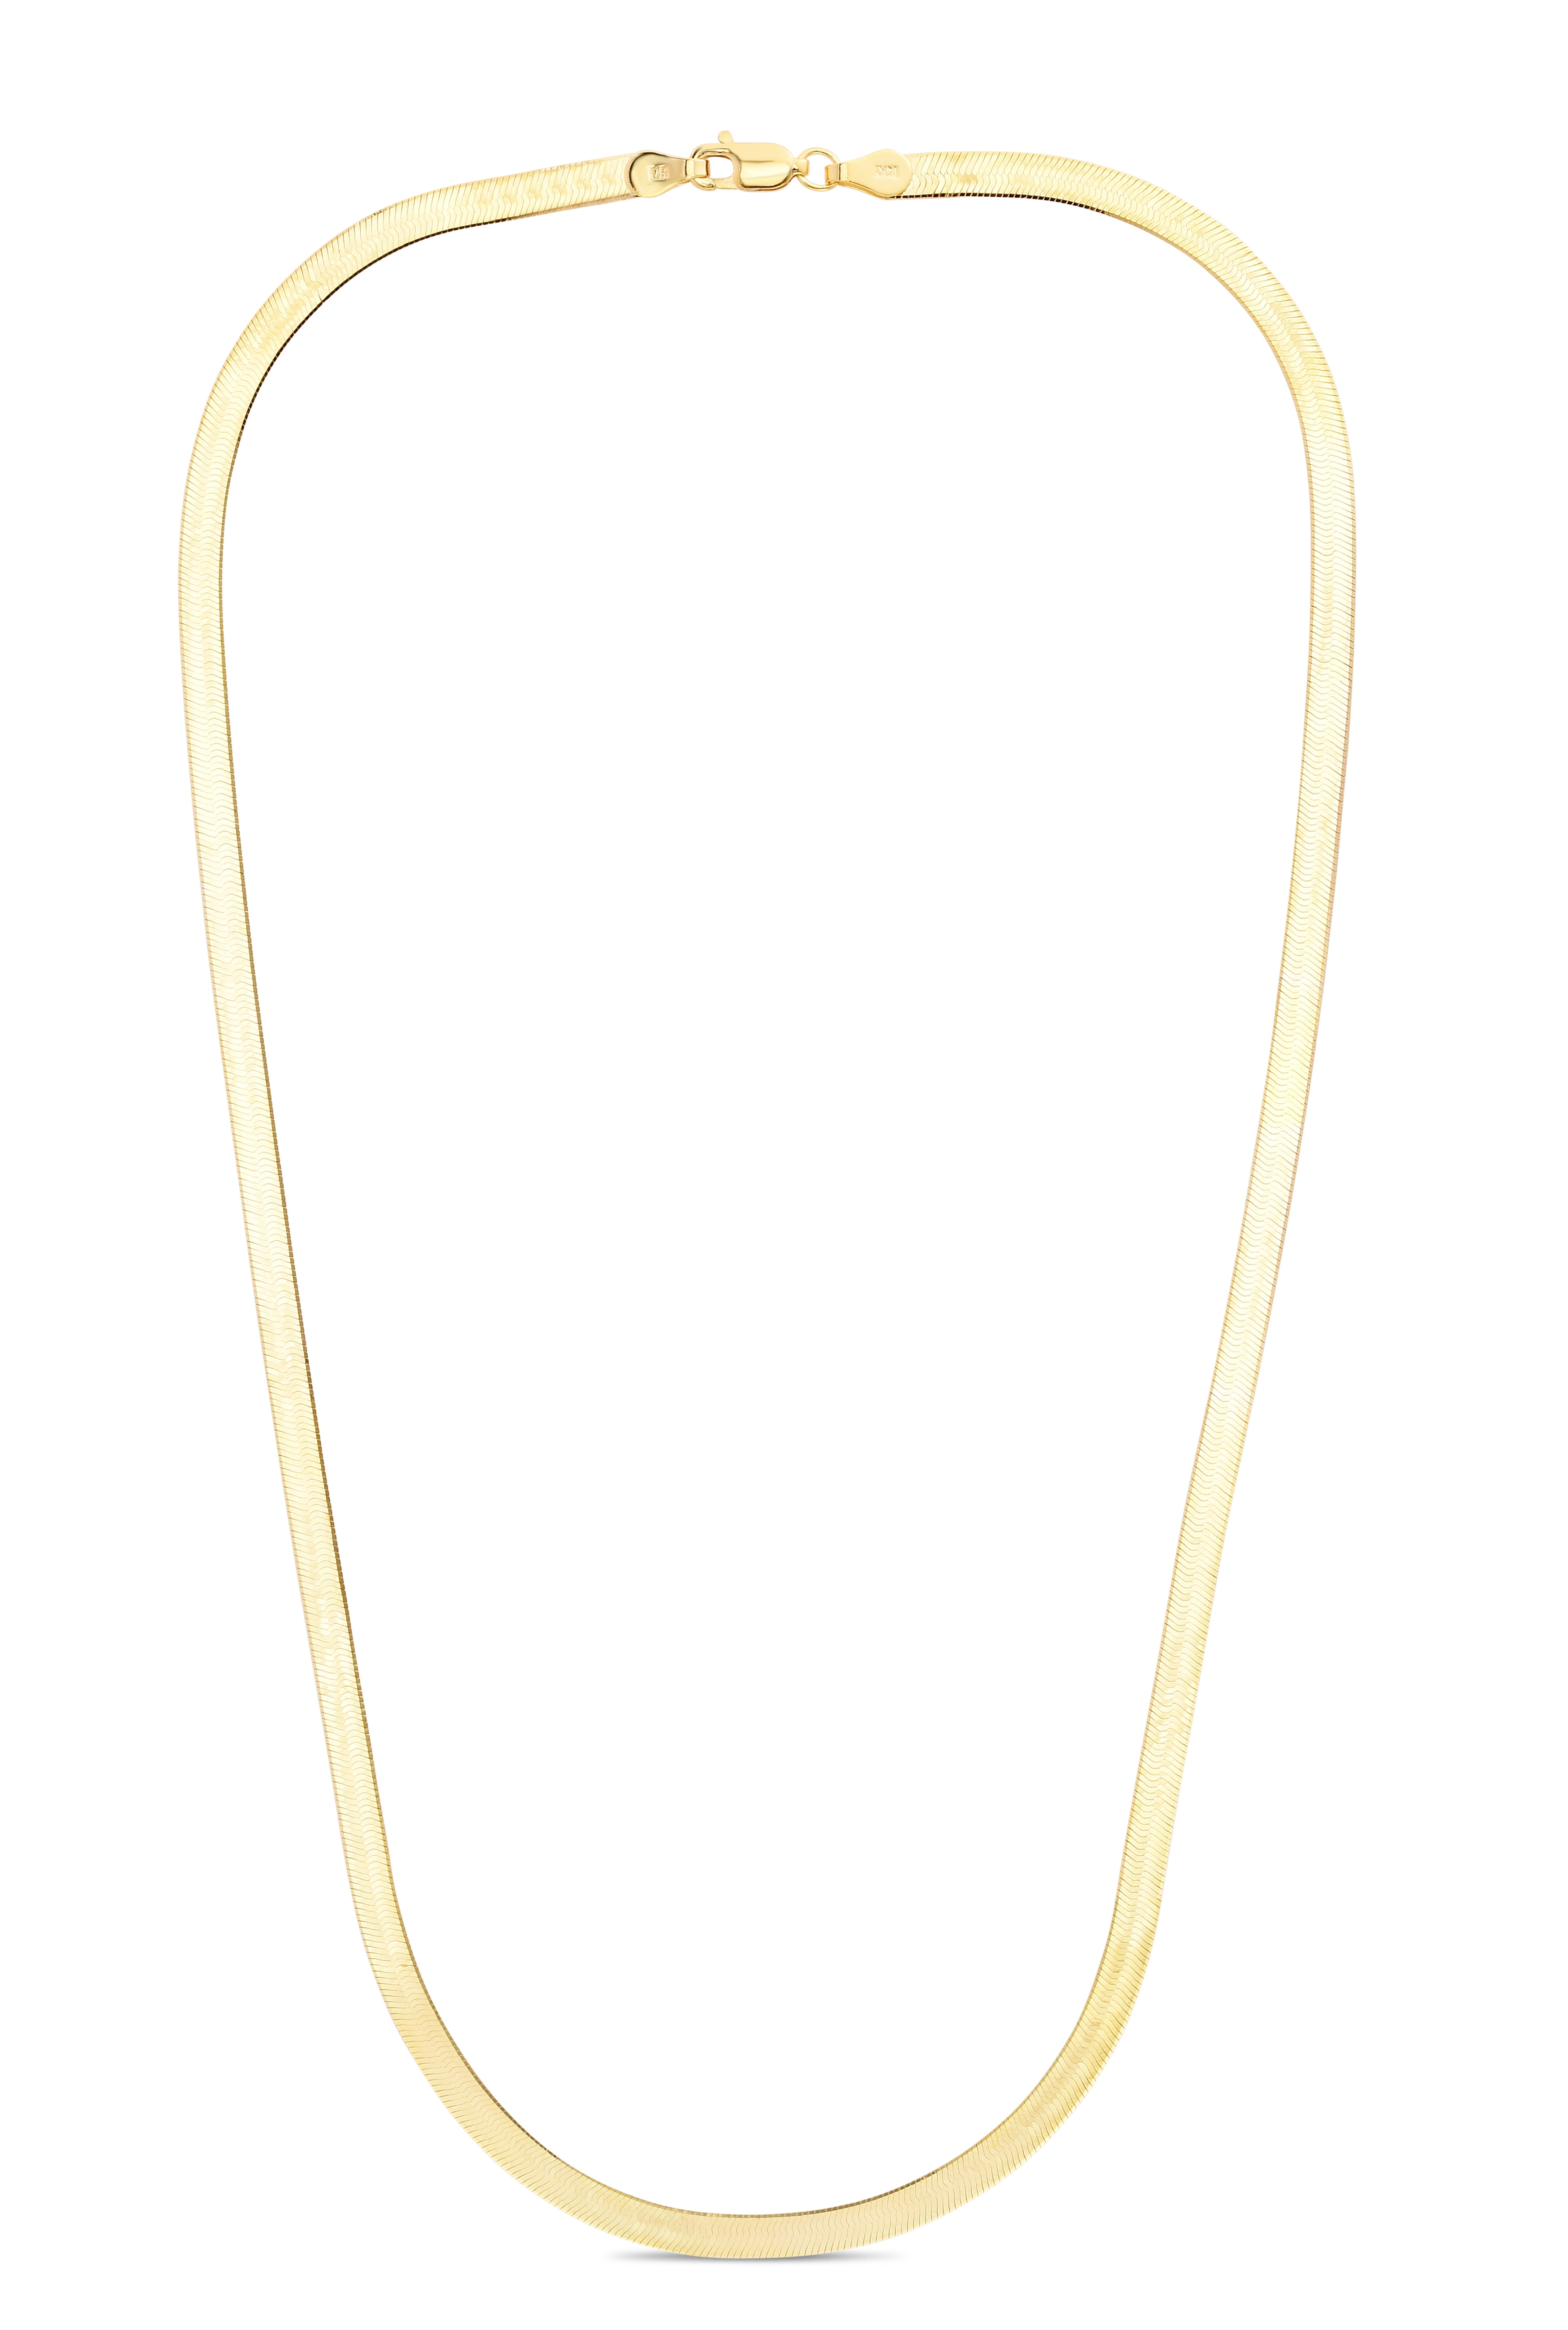 14k Solid Yellow Gold 4mm Flexible Imperial Herringbone Bracelet